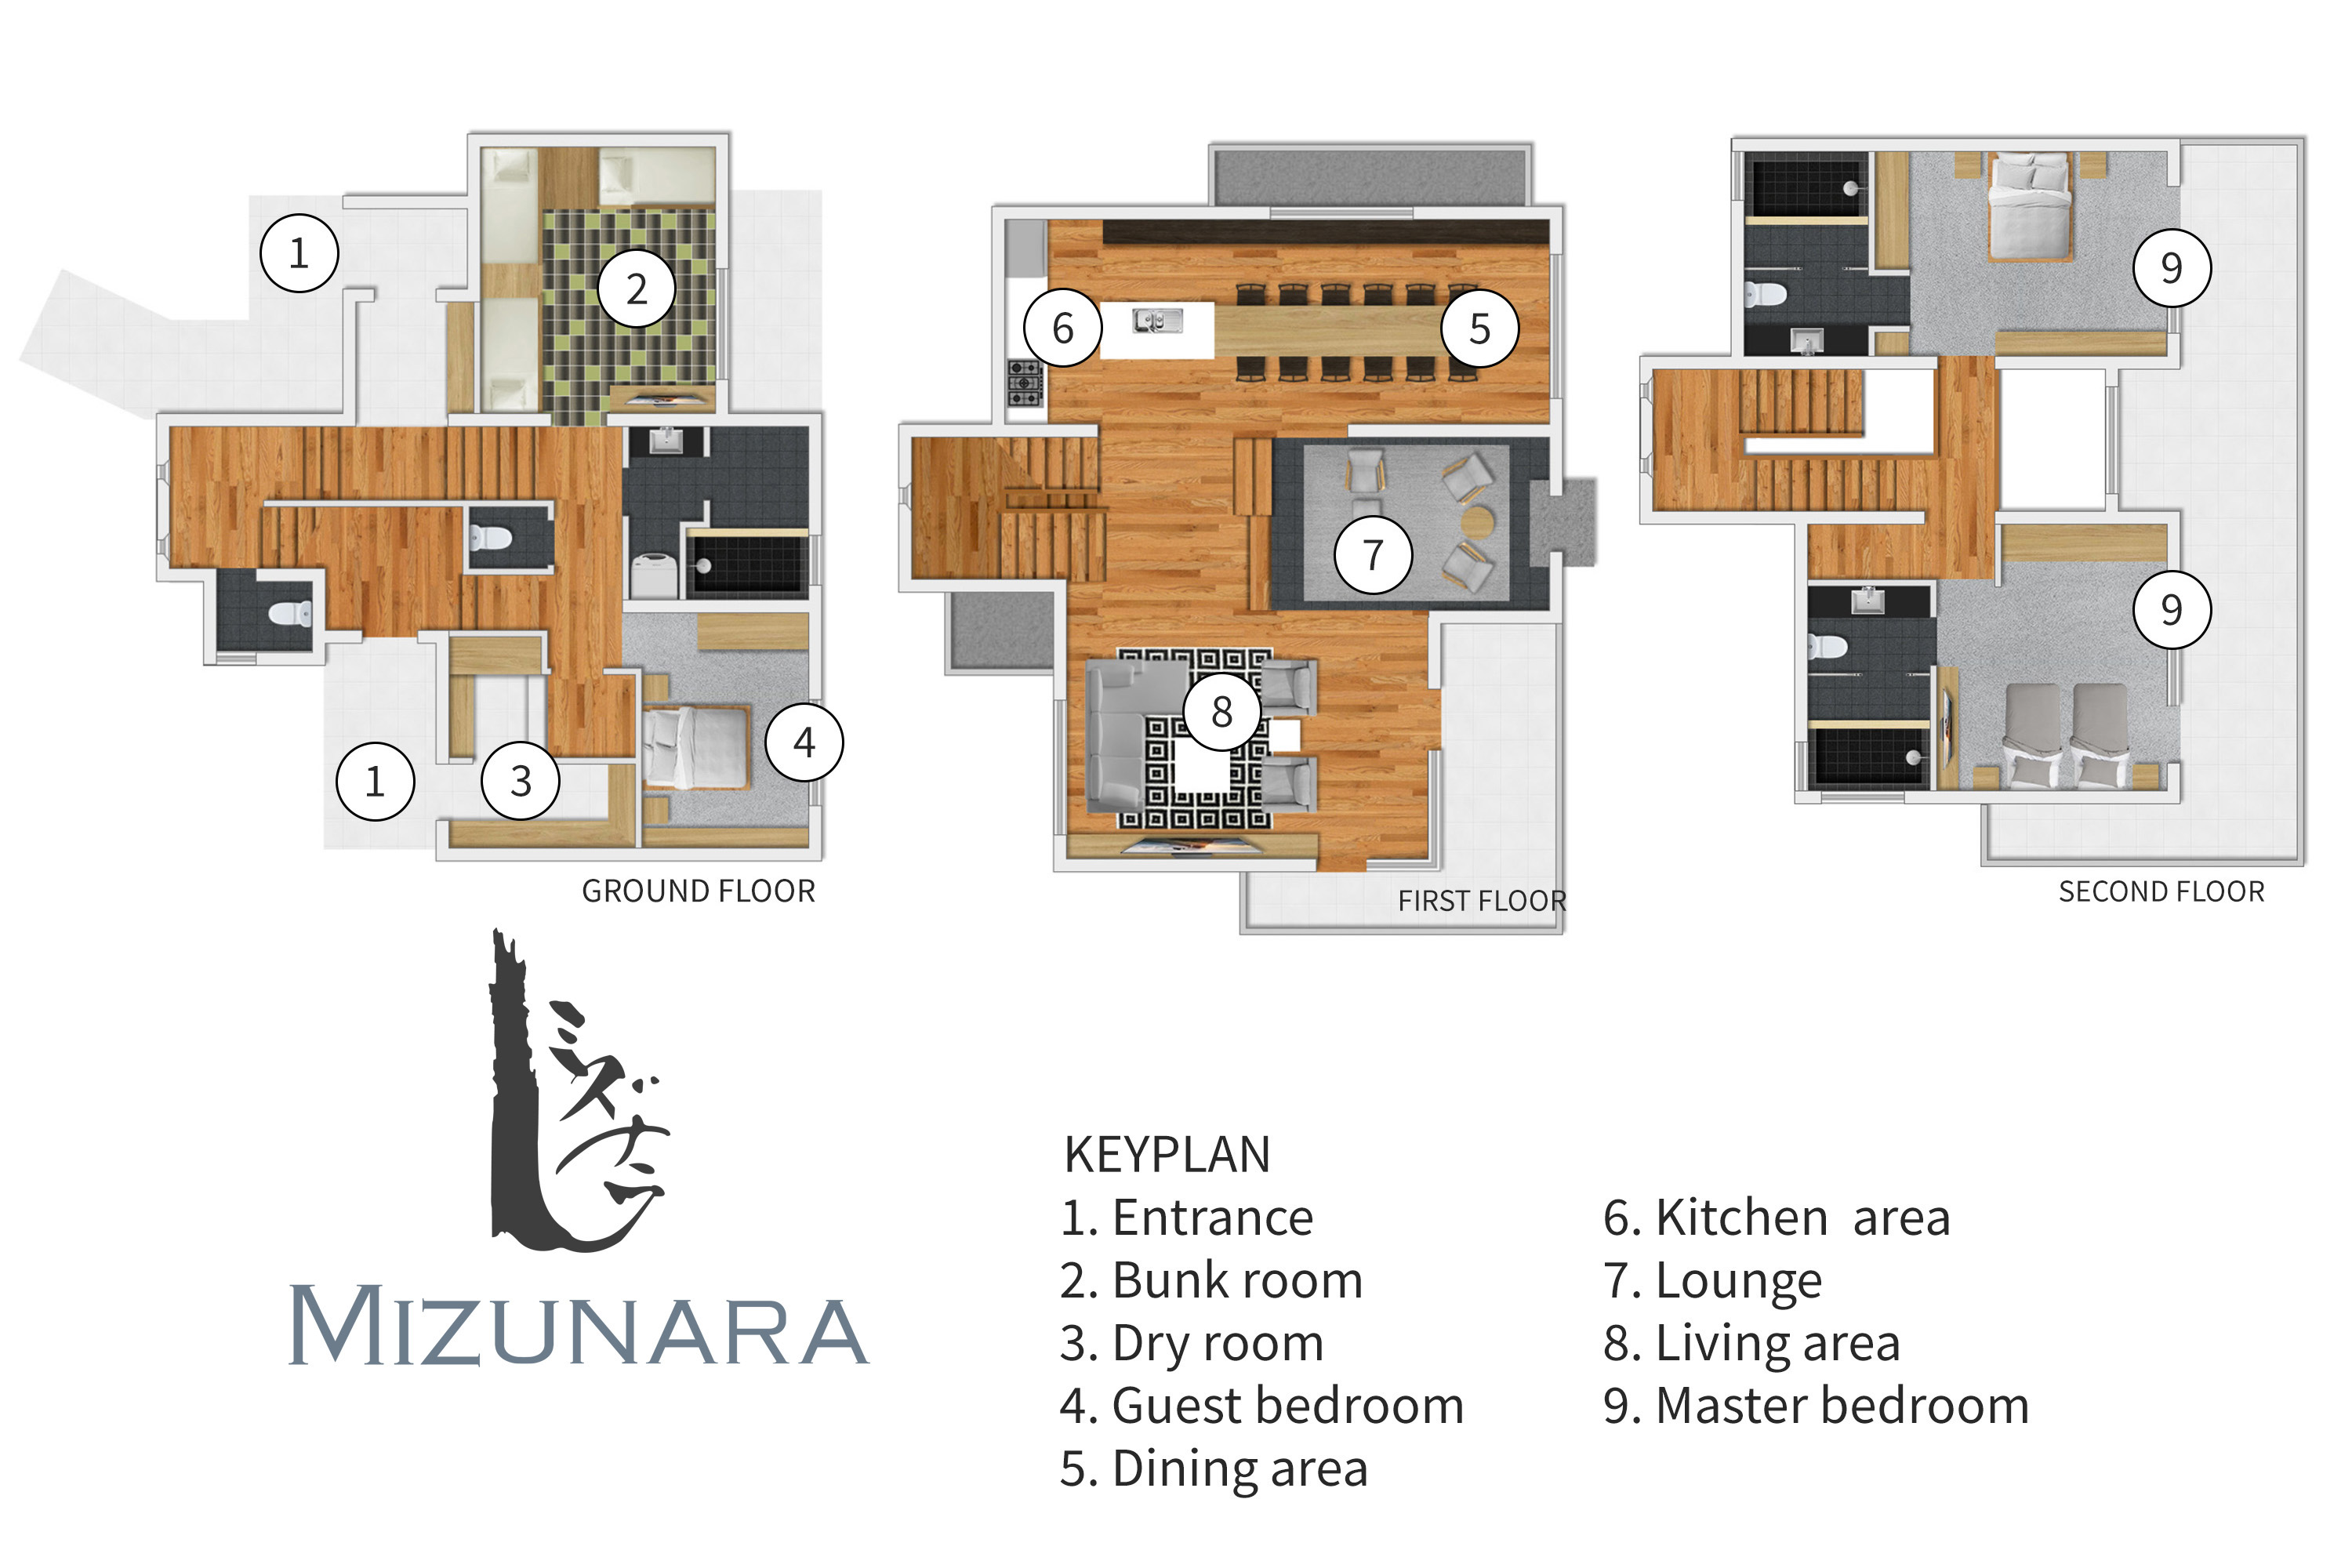 Mizunara - Floorplan